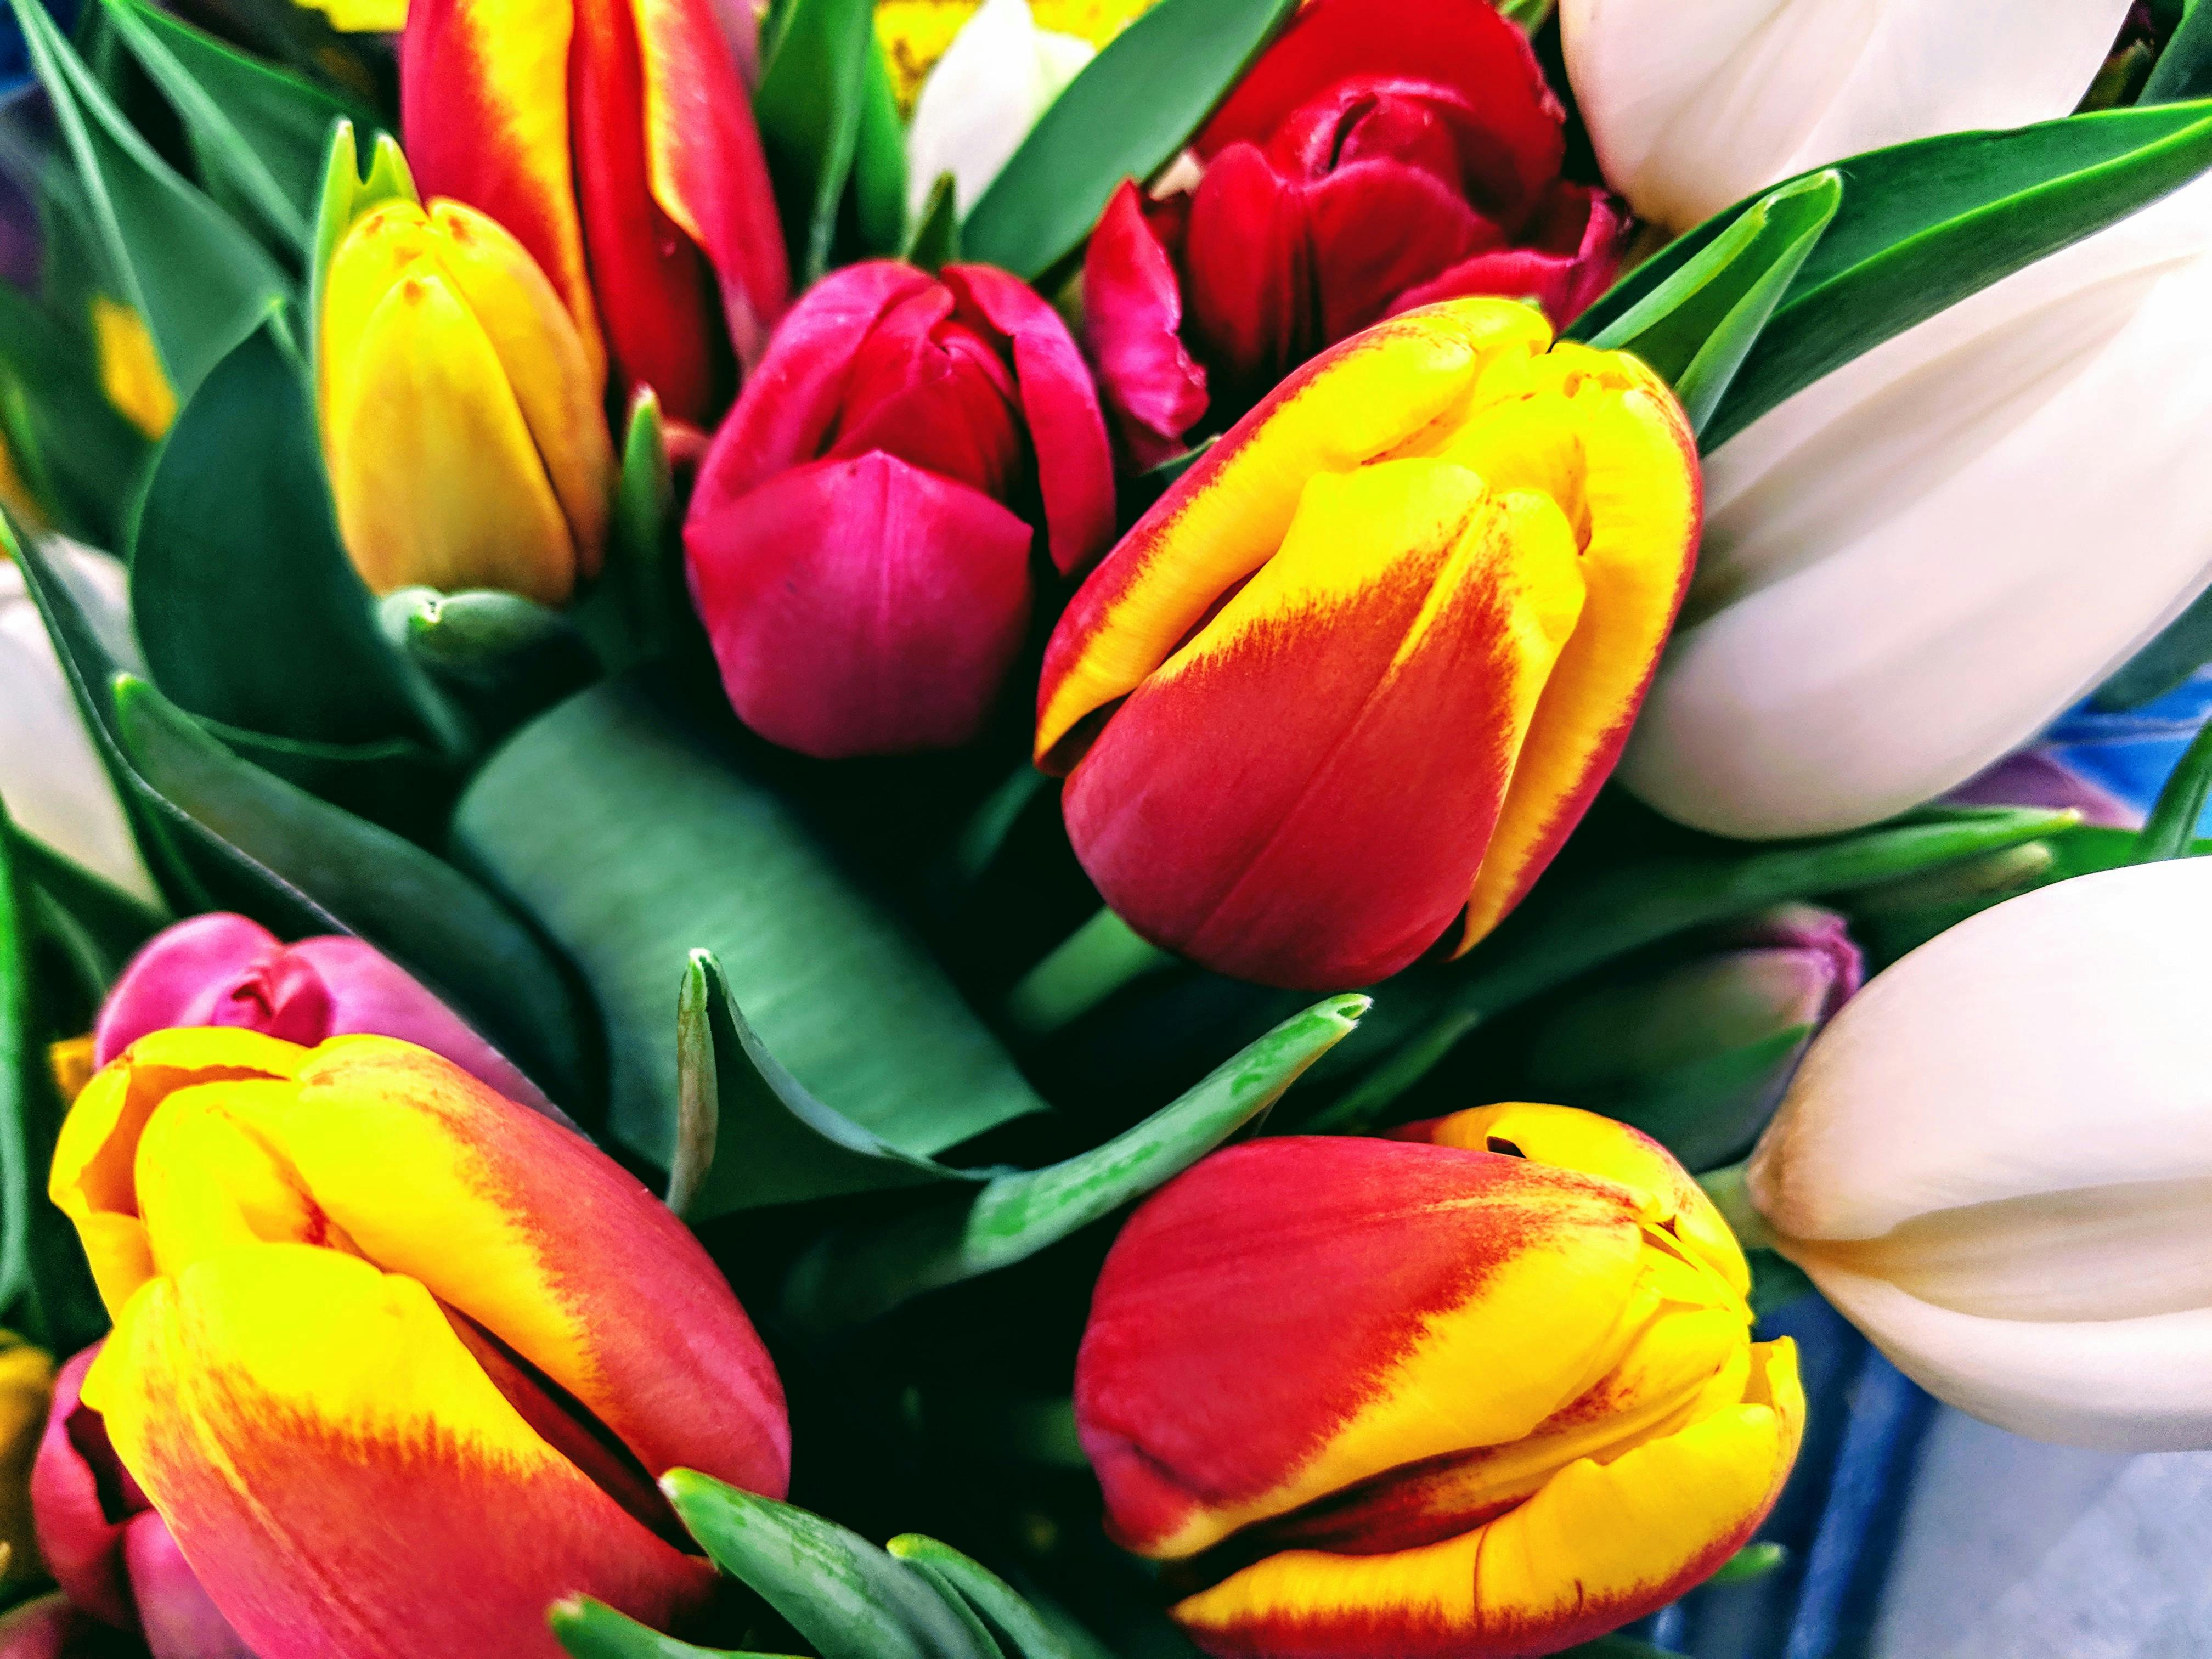 Free stock photo of Pink Tulips, tulips, yellow tulips